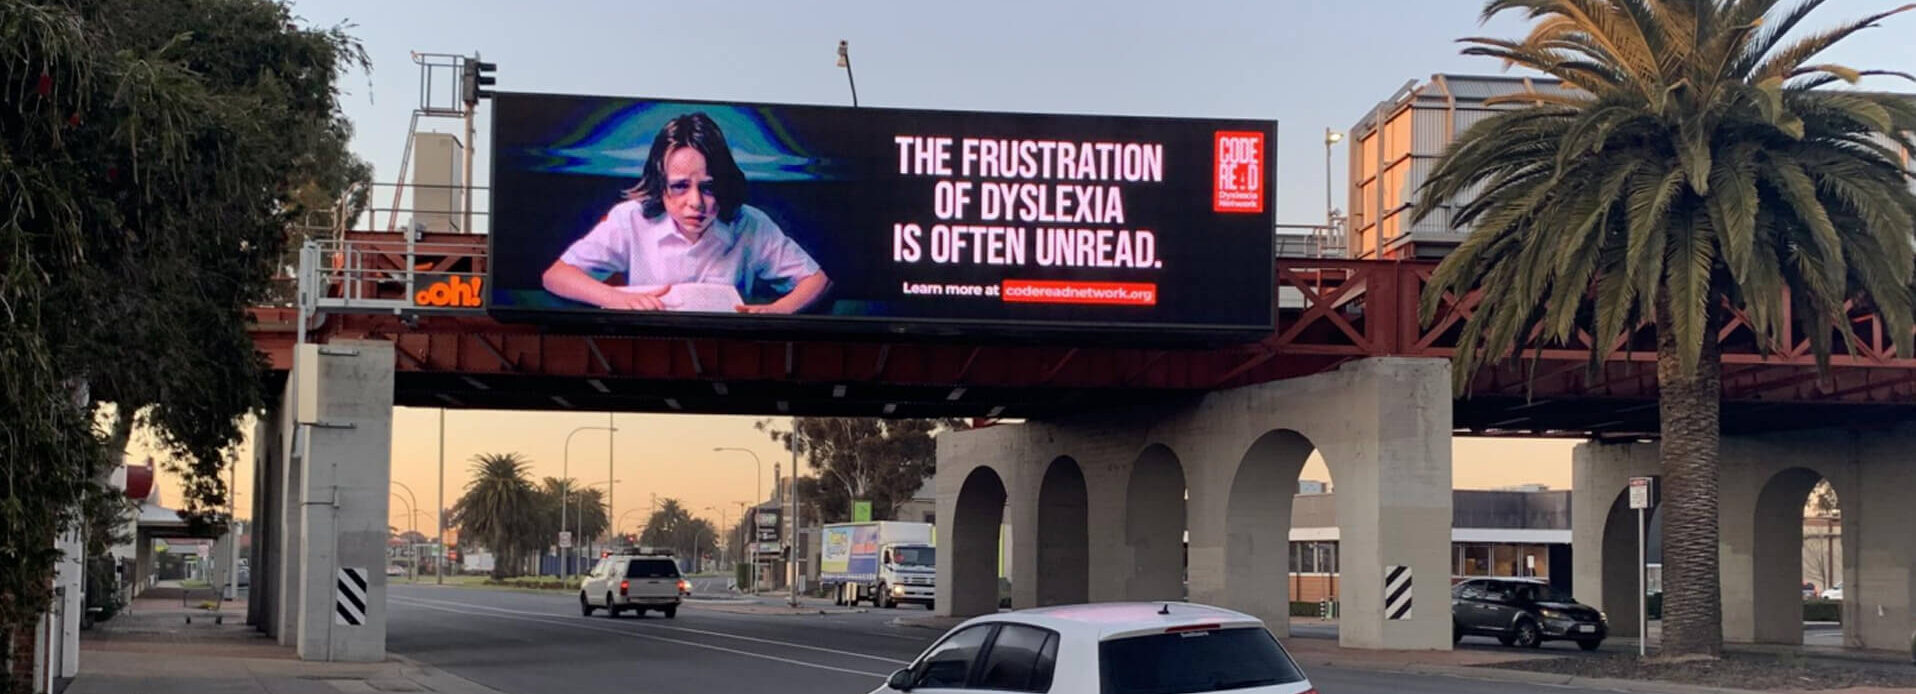 Code Red, read my frustration billboard print ad